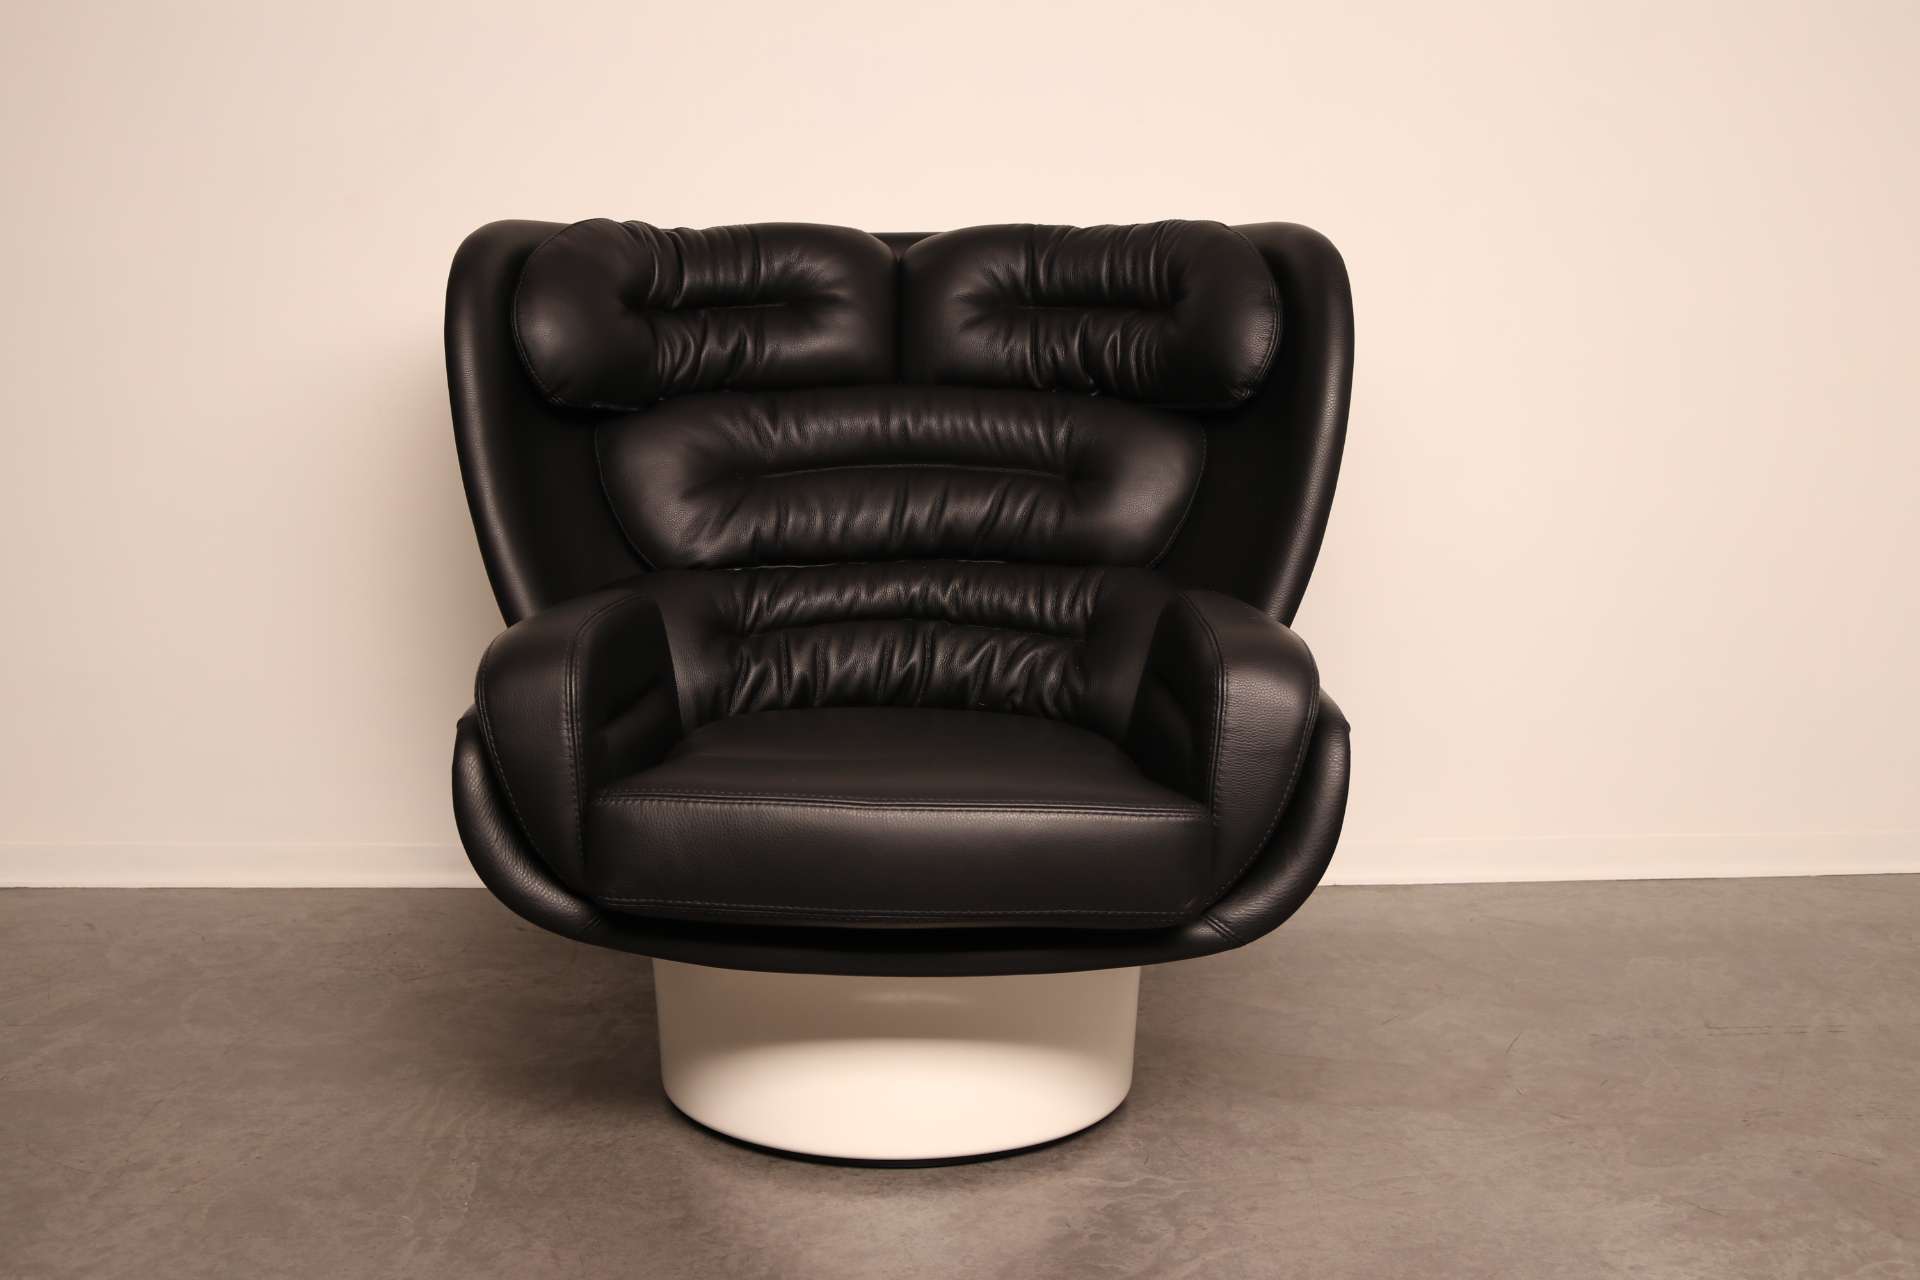 Elda lounge chair fiberglass white black leather iconic (7)